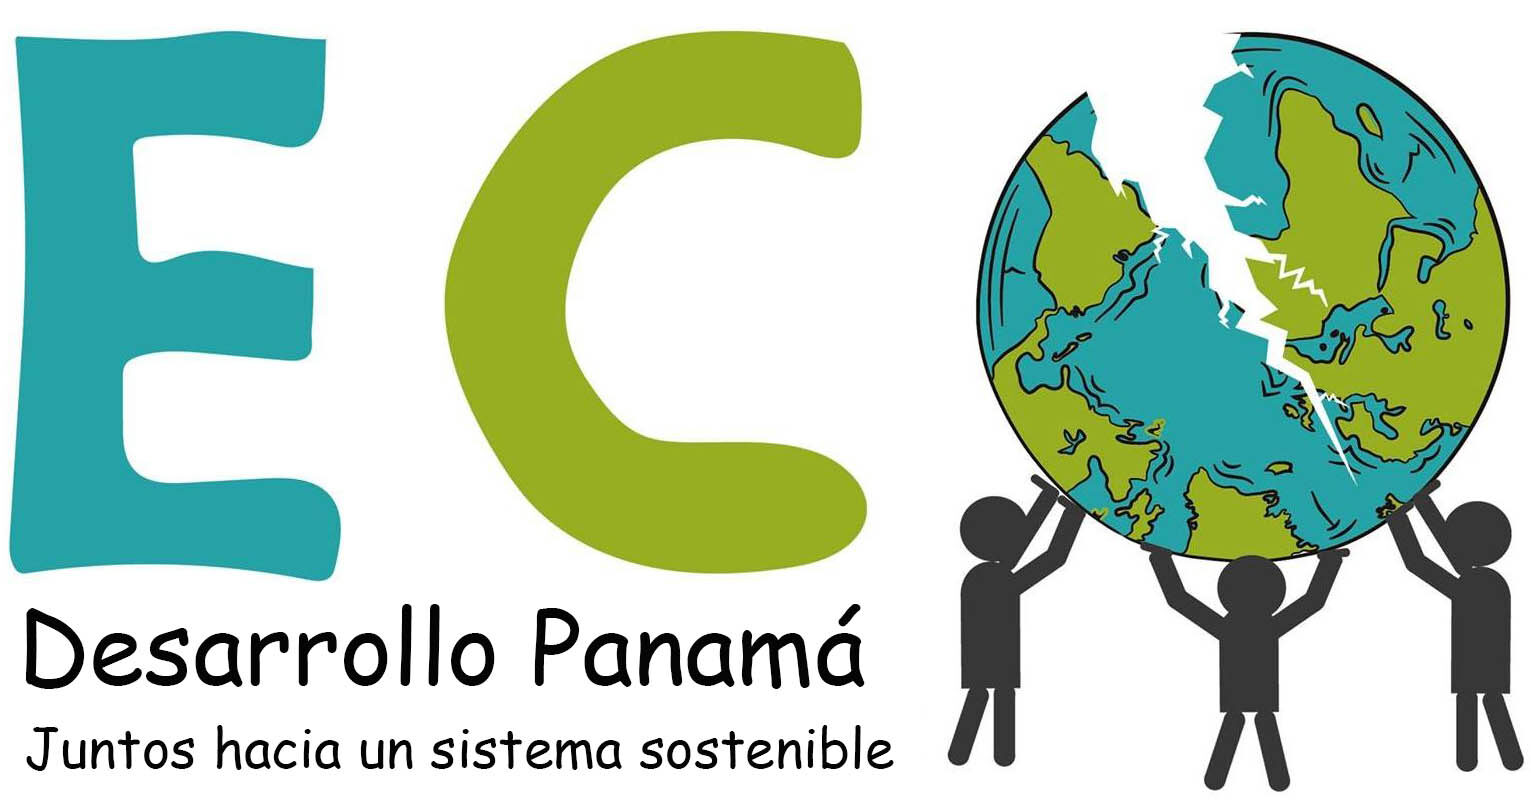 Eco Desarrollo Panama